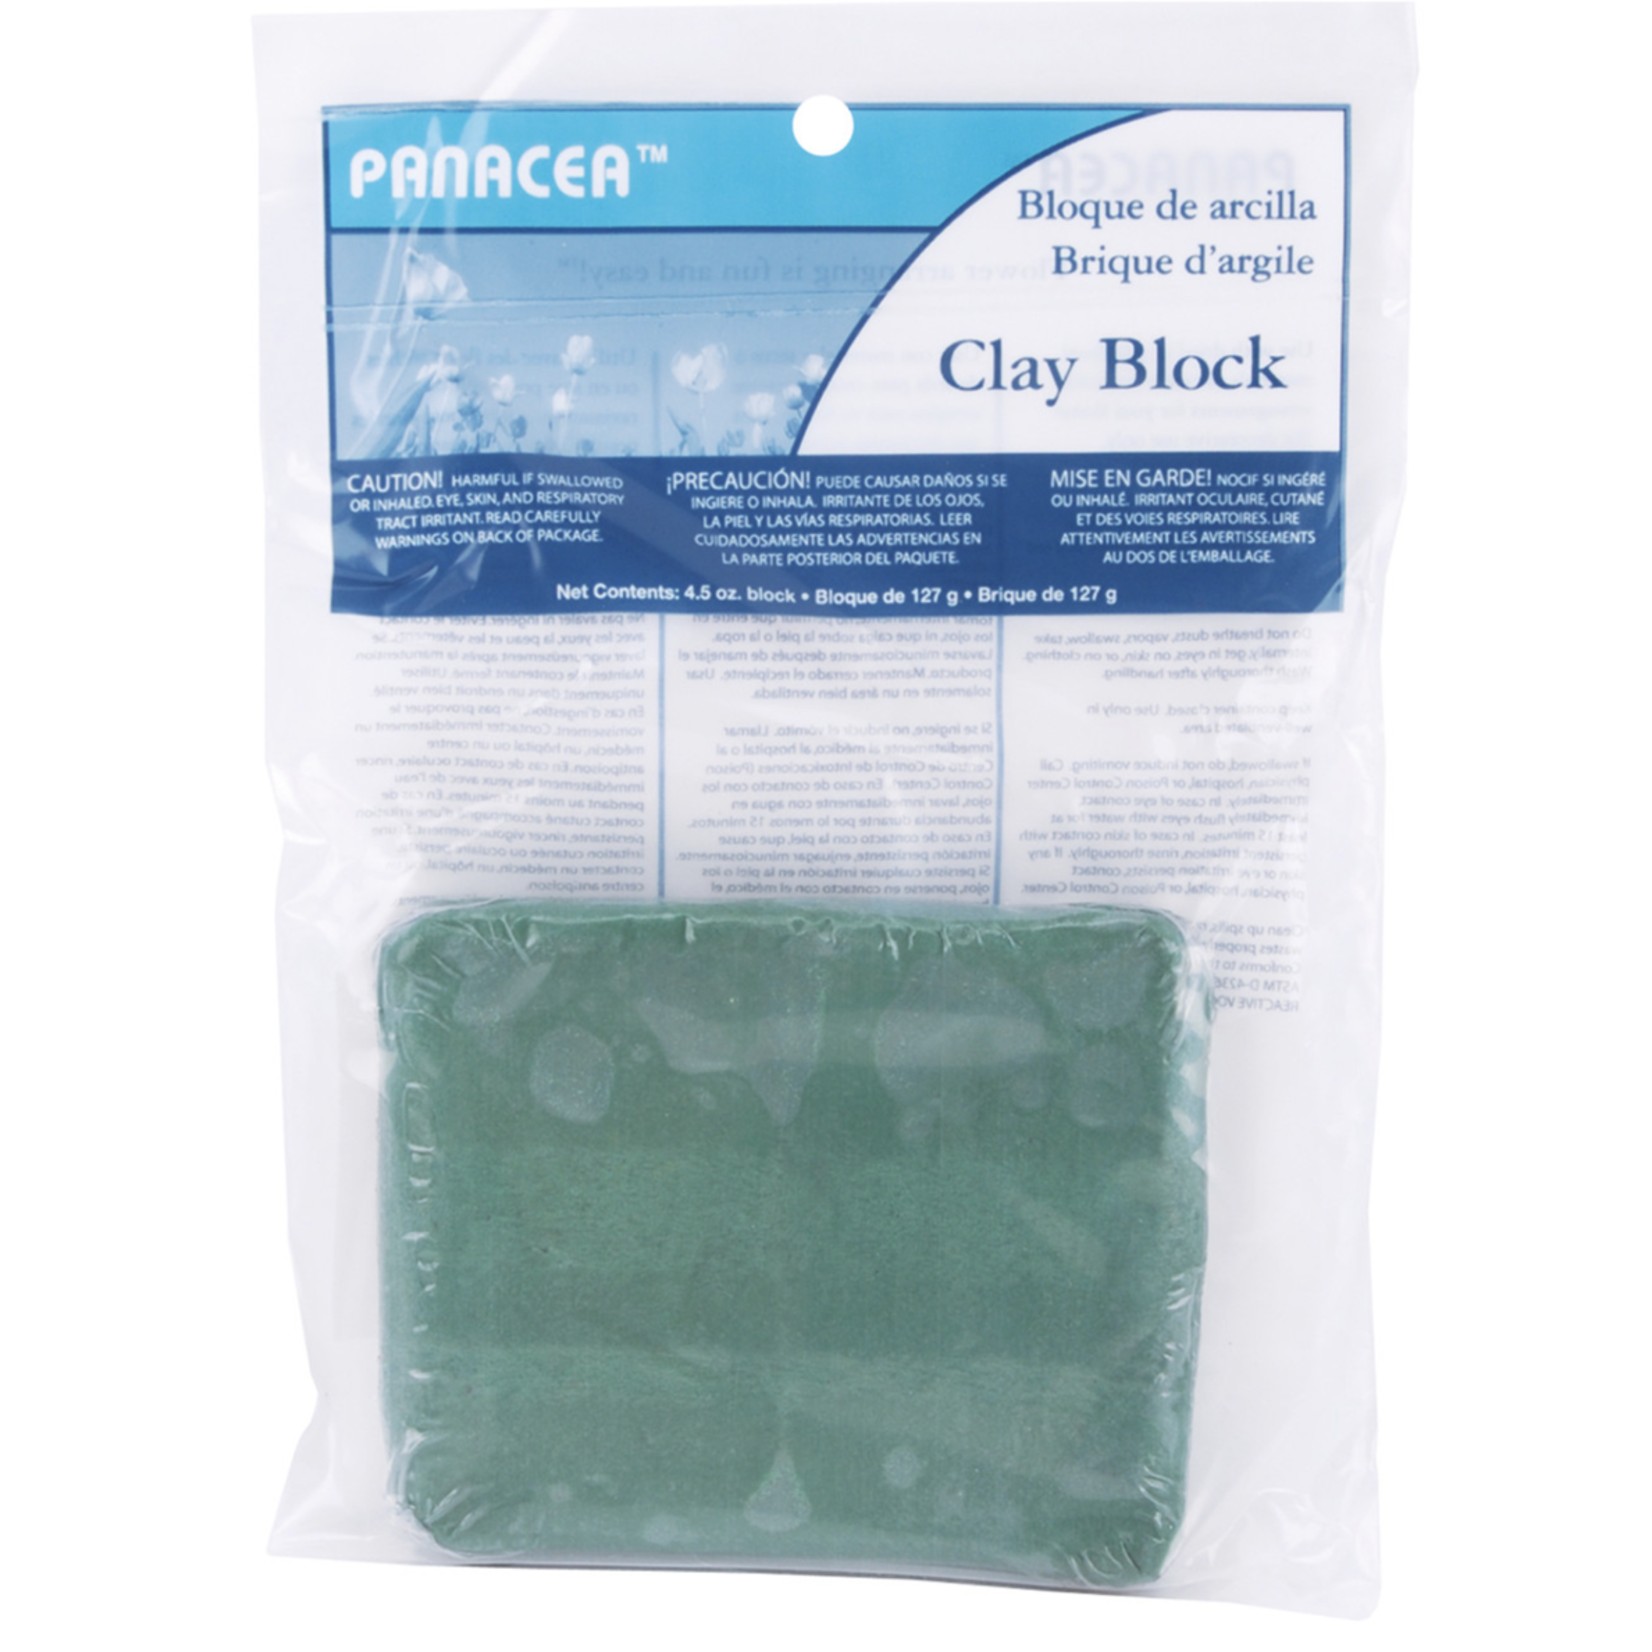 CLAY BLOCK 4.5 OZ